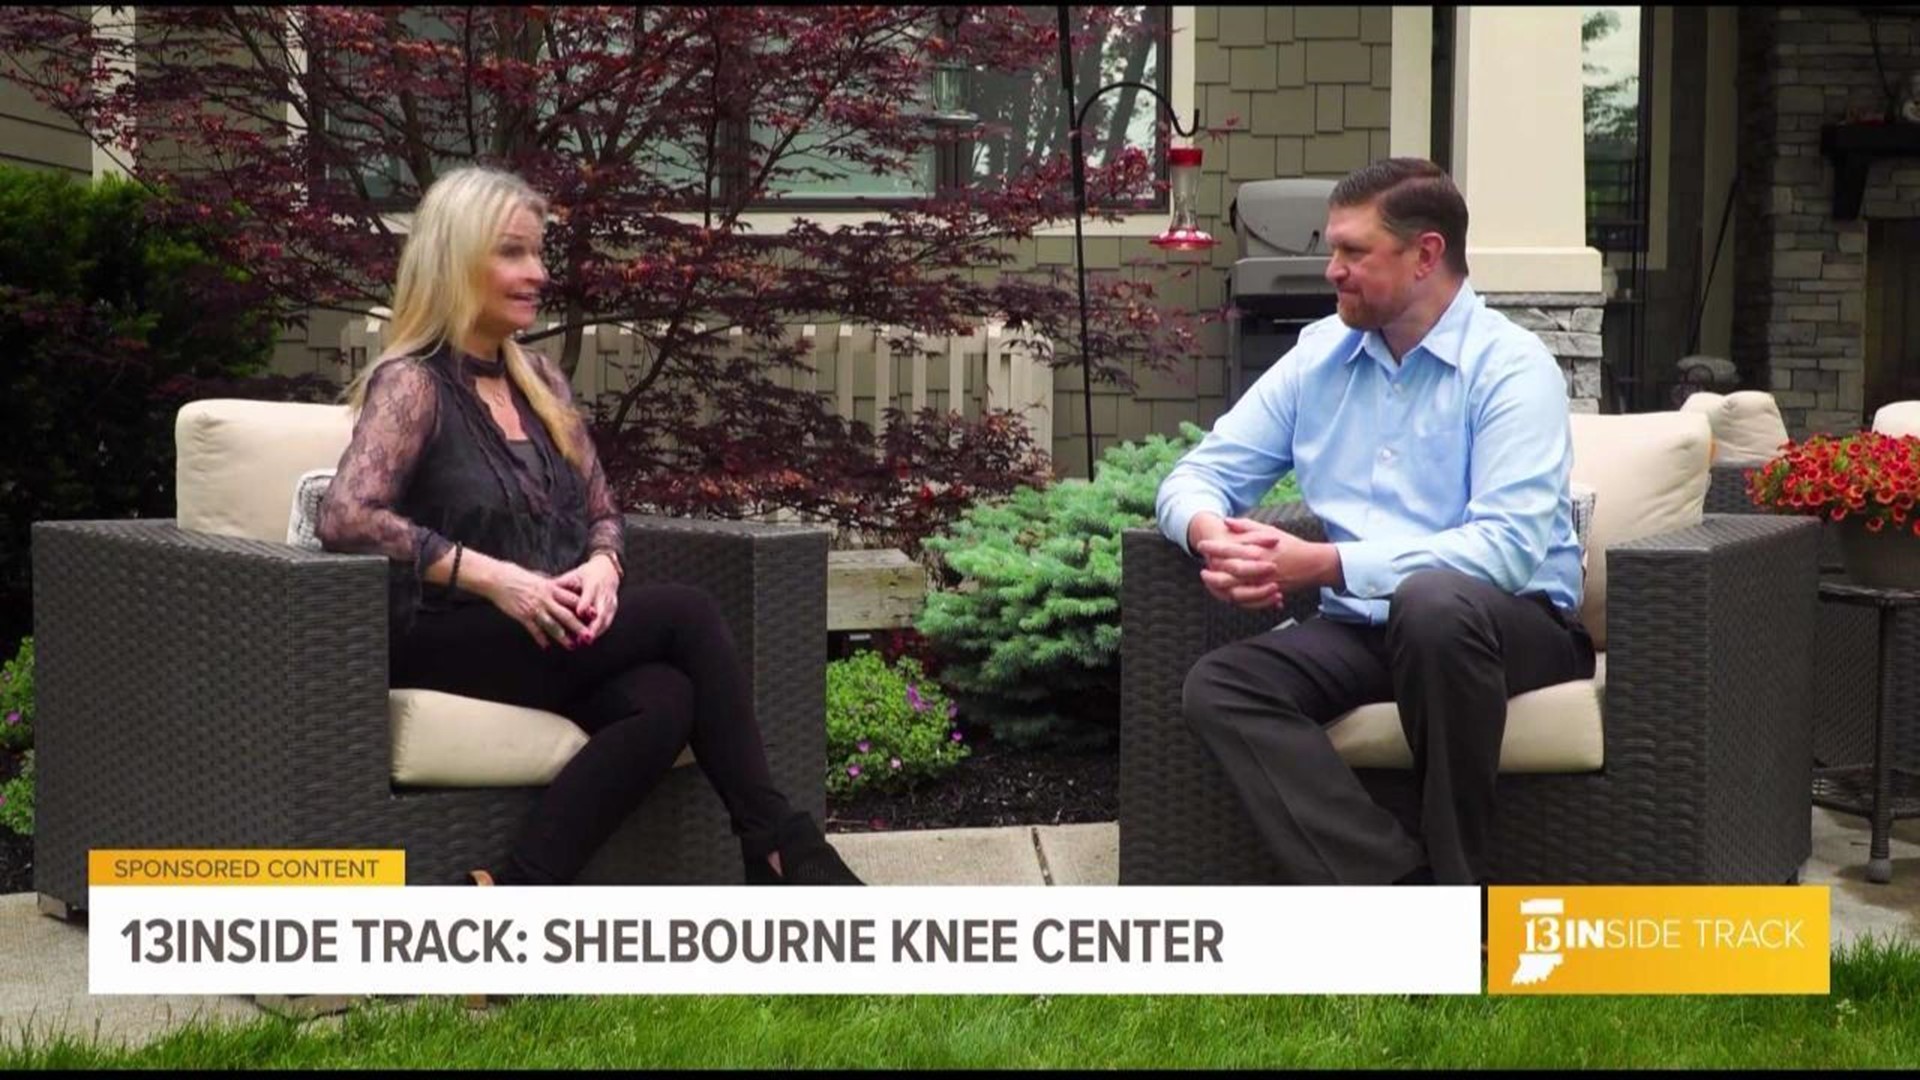 13INside Track talks with Shelbourne Knee Center